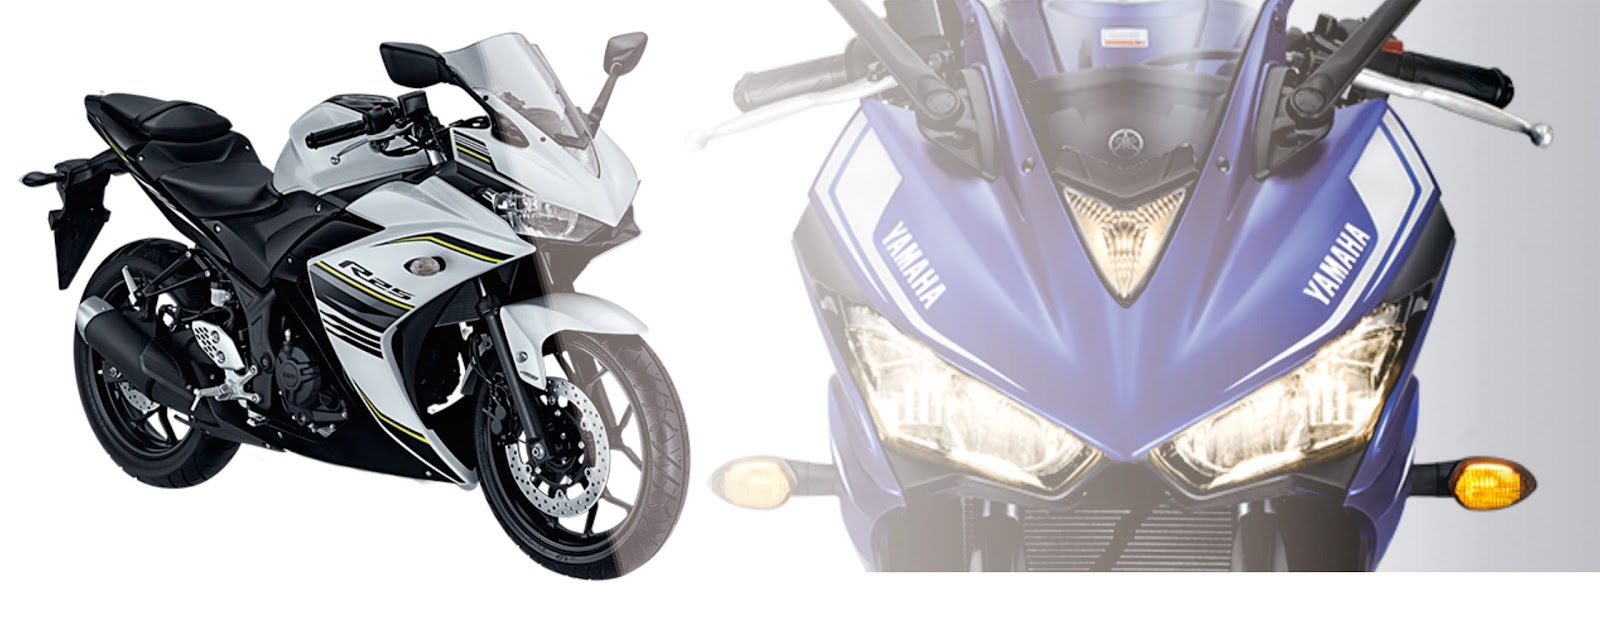 Motor Terbaik Yamaha 250 Cc Di Indonesia 2018 Pilihan Banyak Orang